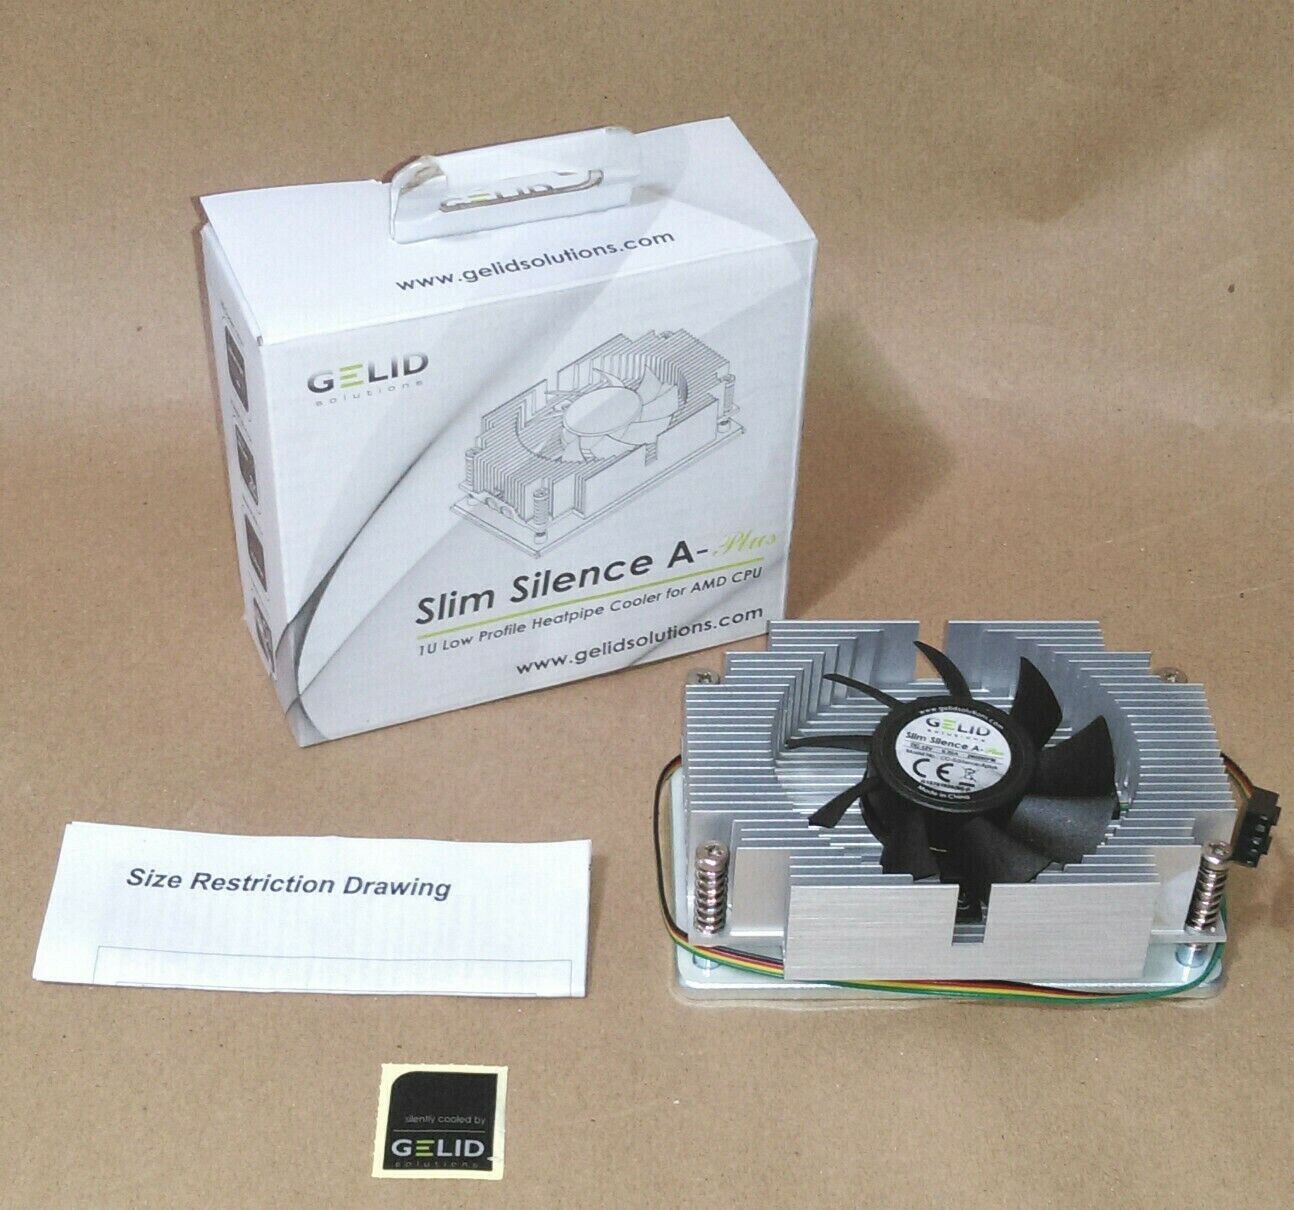 NEW Gelid Slim Silence A-Plus CC-SSilence-Aplus AMD AM2,AM3,AM3+,FM1 CPU Cooler